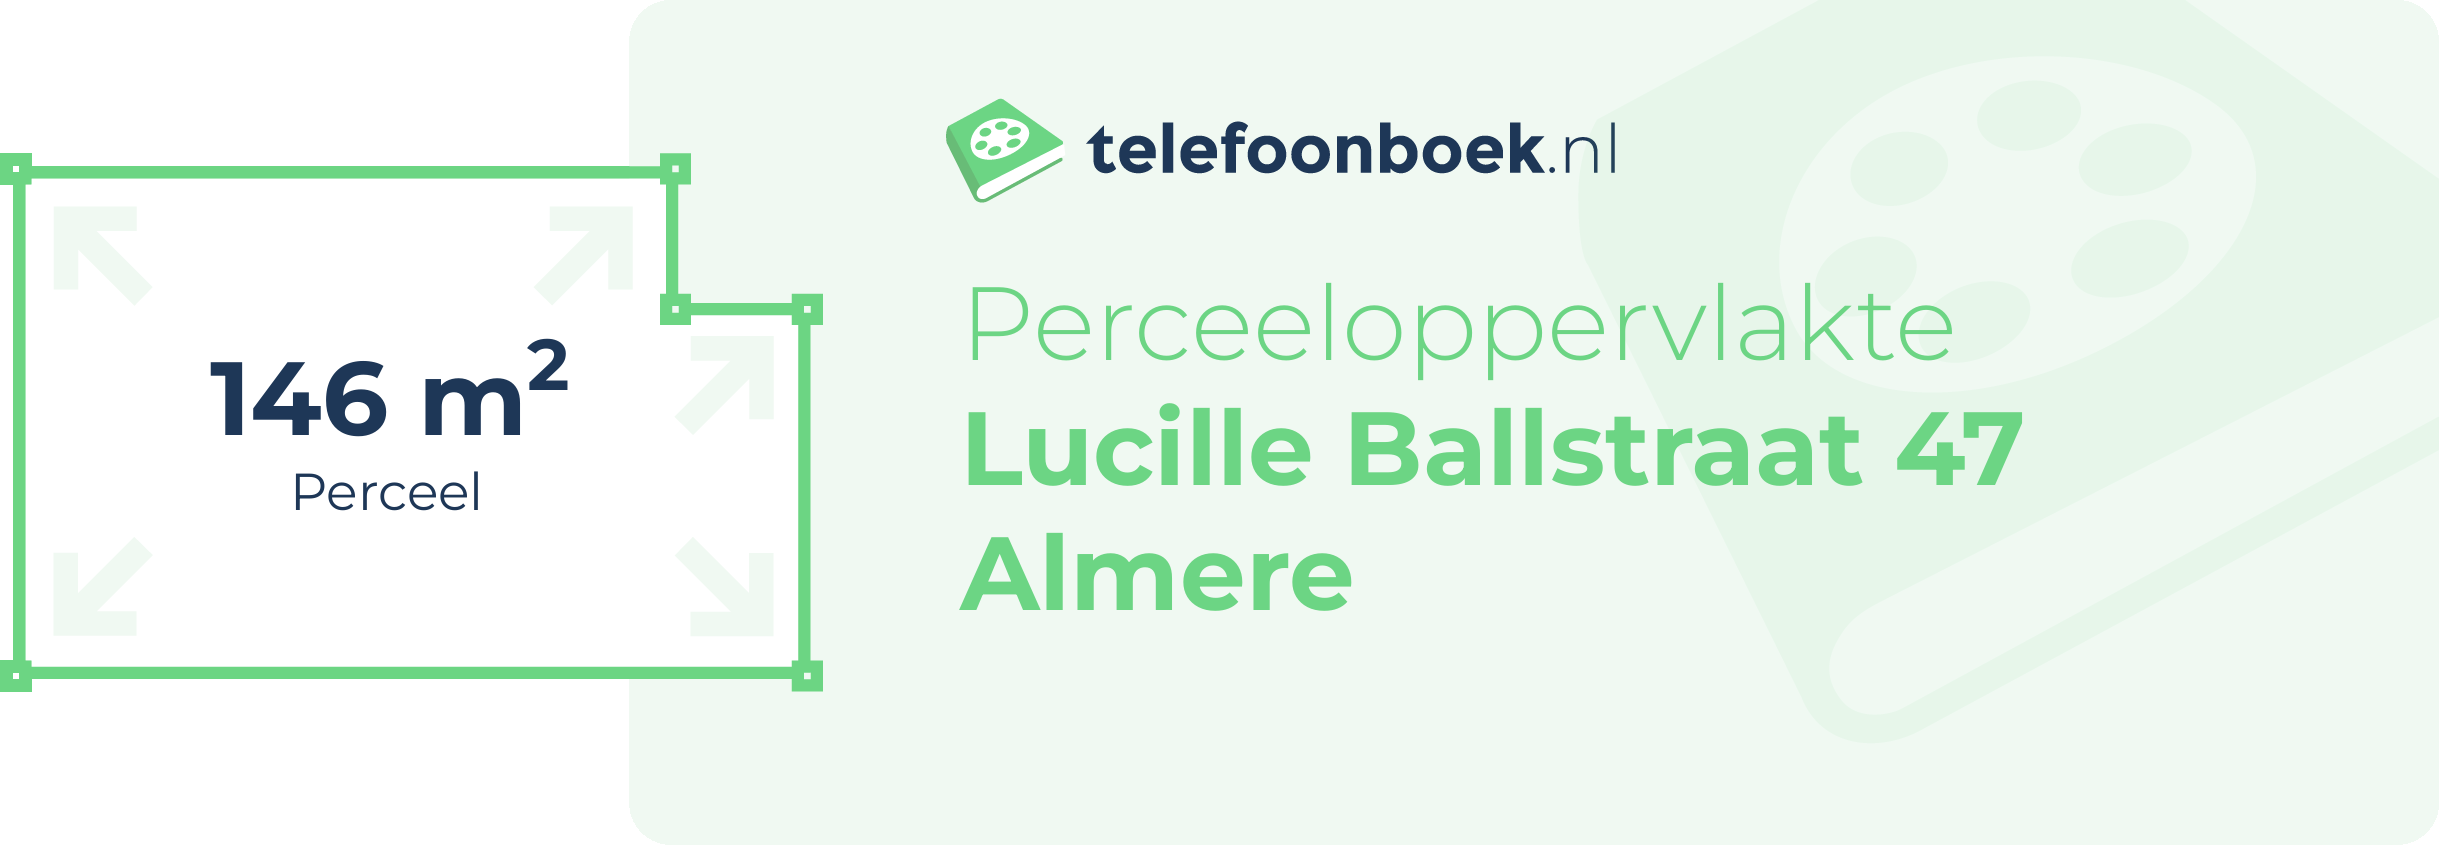 Perceeloppervlakte Lucille Ballstraat 47 Almere